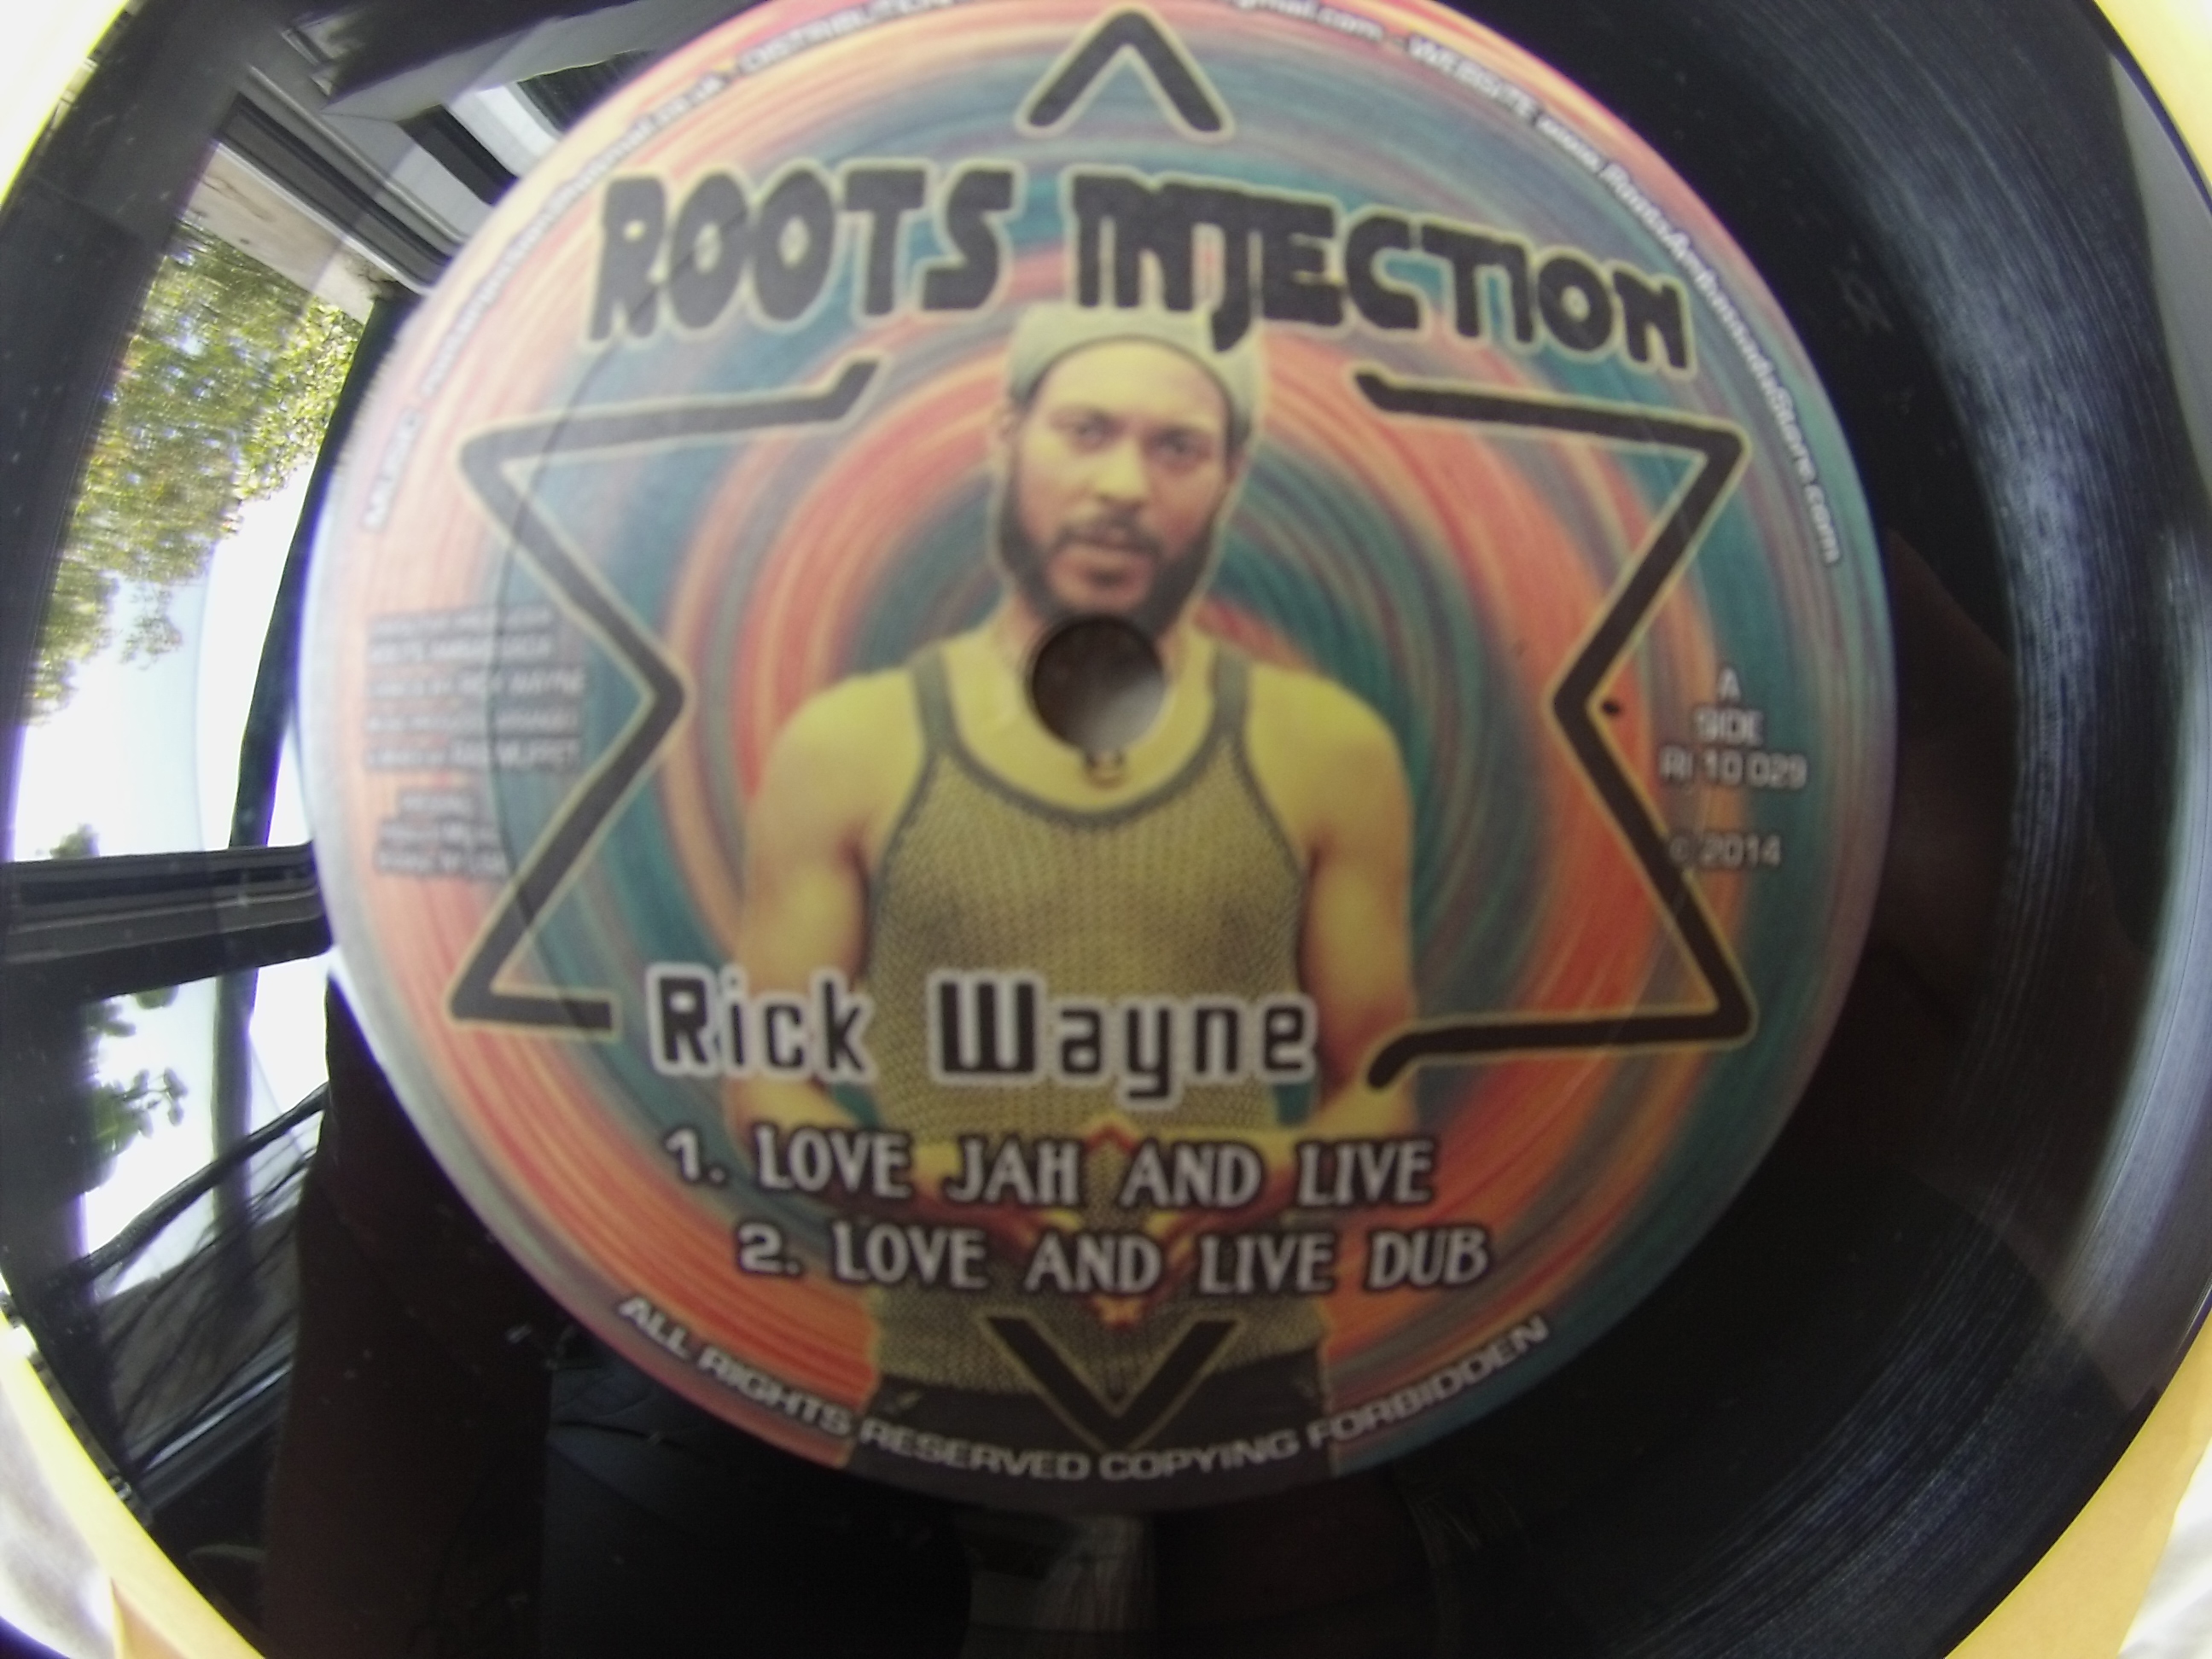 RICK WAYNE - Love jah and live (Roots injection ) 10"